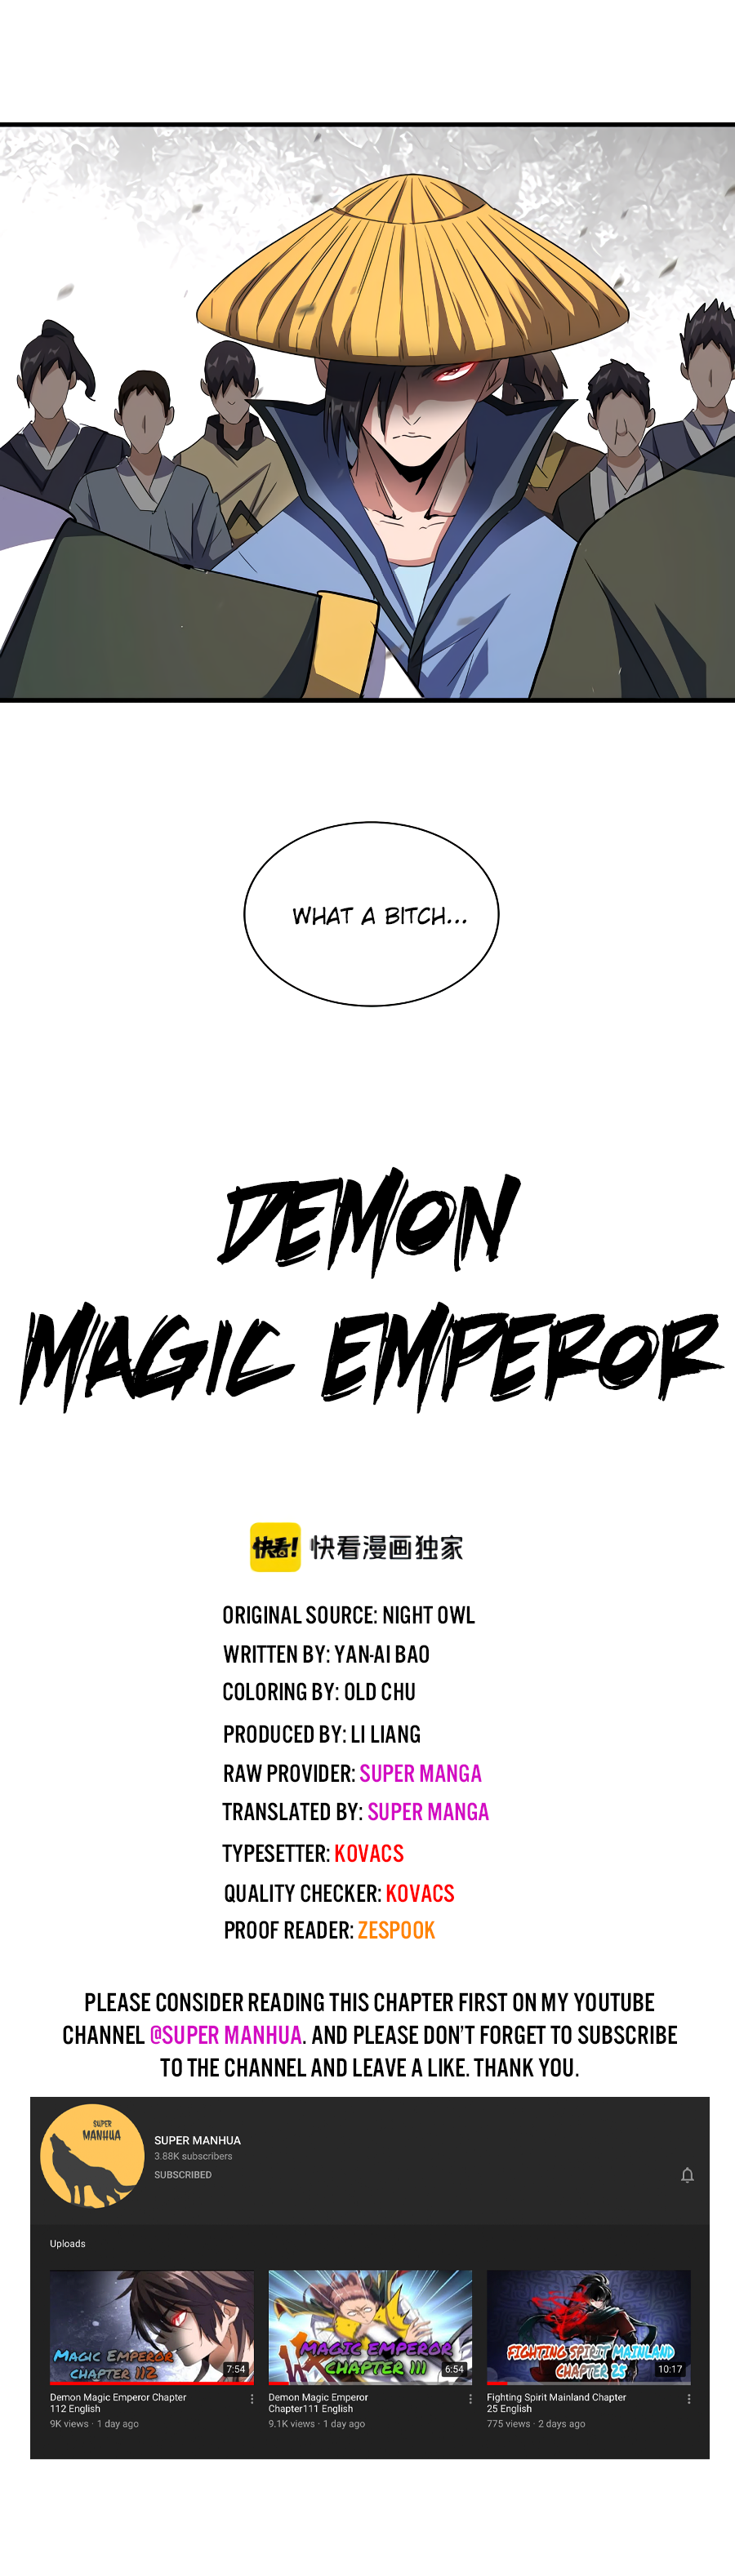 Magic Emperor Chapter 111